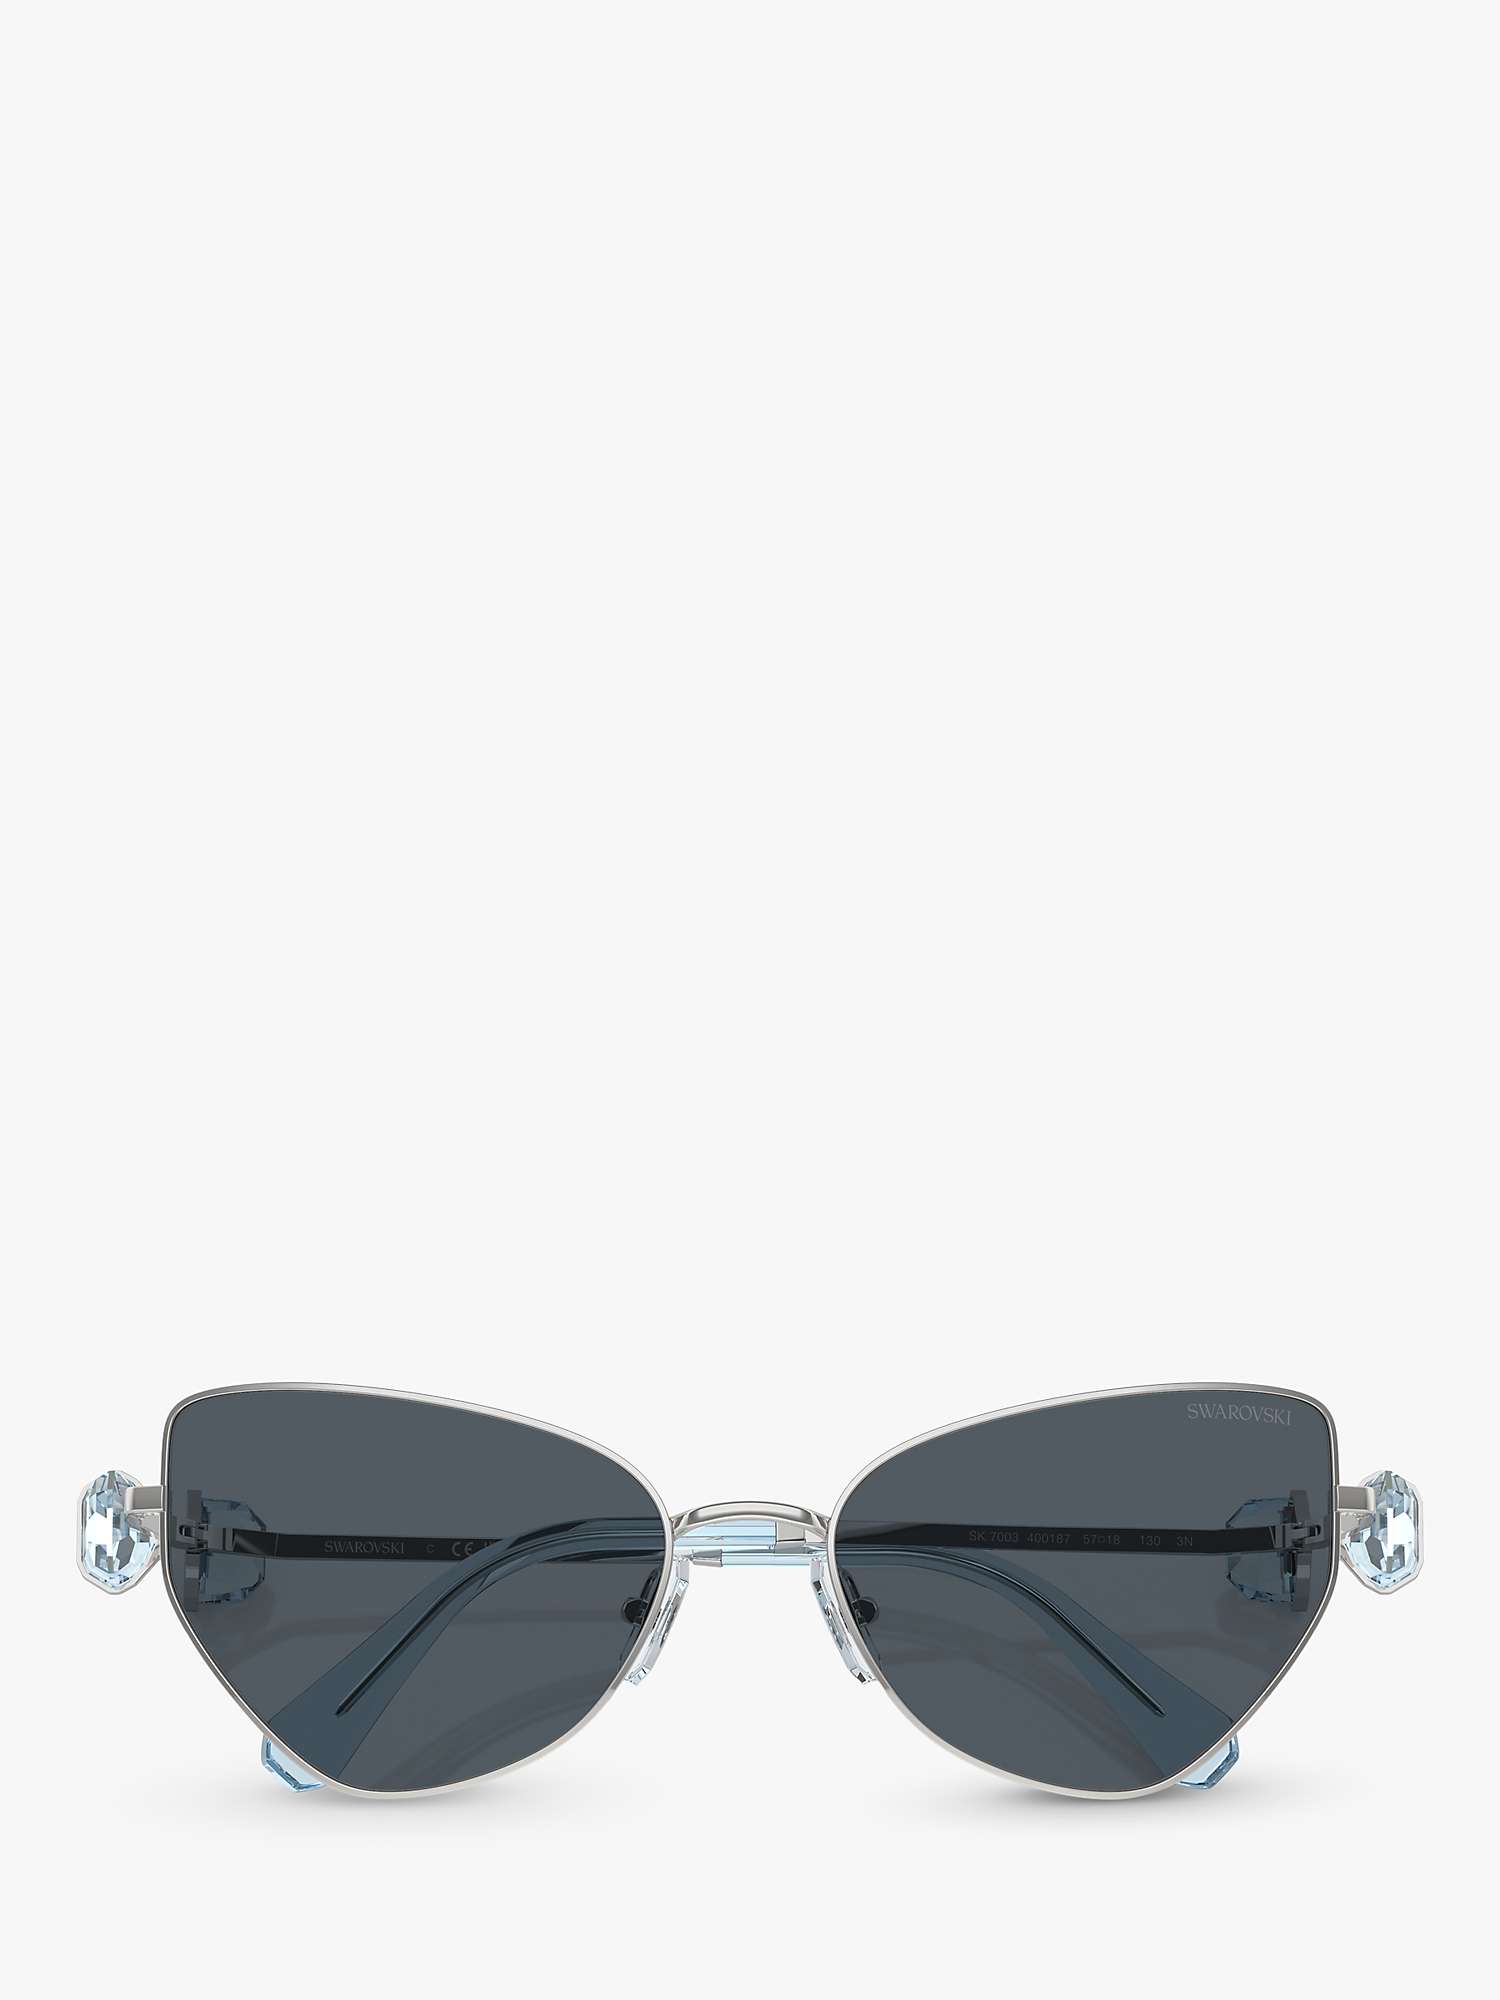 Buy Swarovski SK7003 Women's Irregular Sunglasses, Silver/Grey Online at johnlewis.com